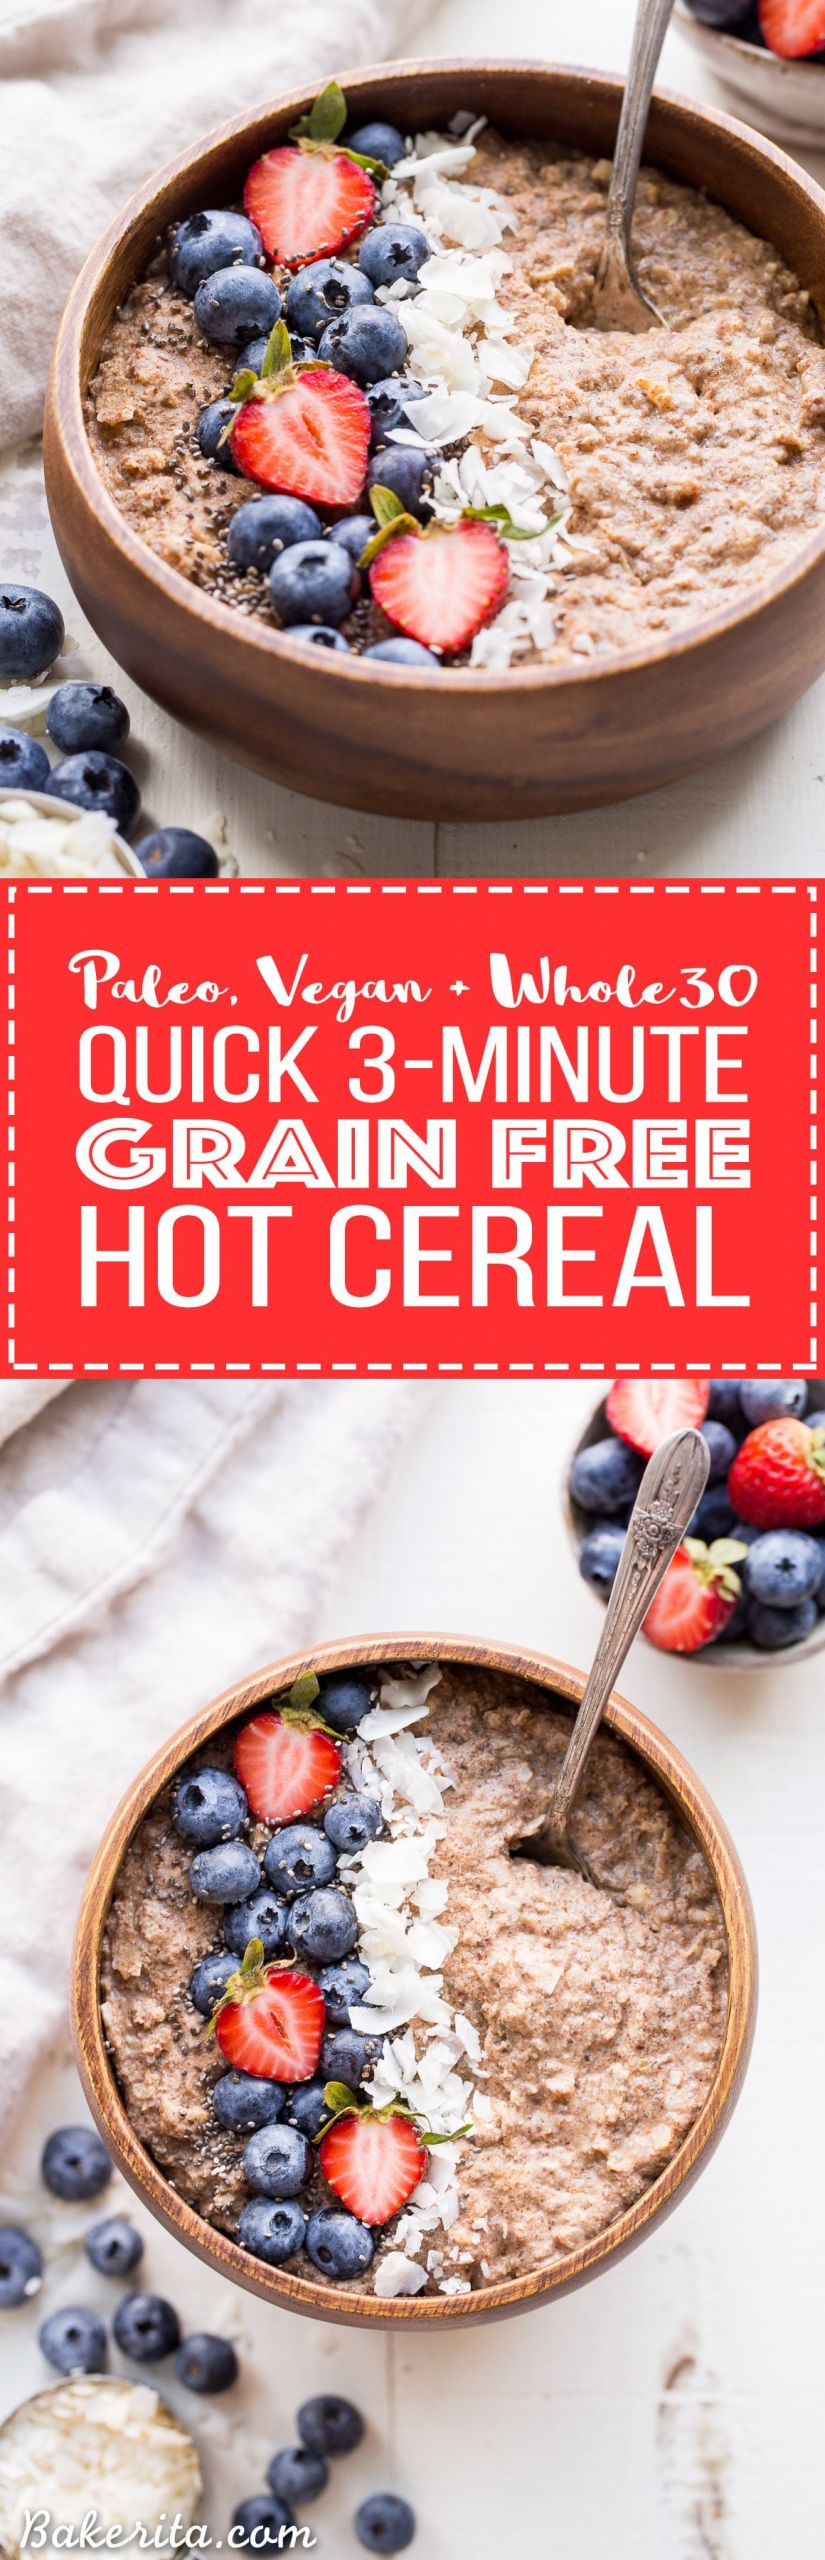 Grain Free Vegan Recipes
 Quick Grain Free Hot Cereal Gluten Free Paleo Whole30